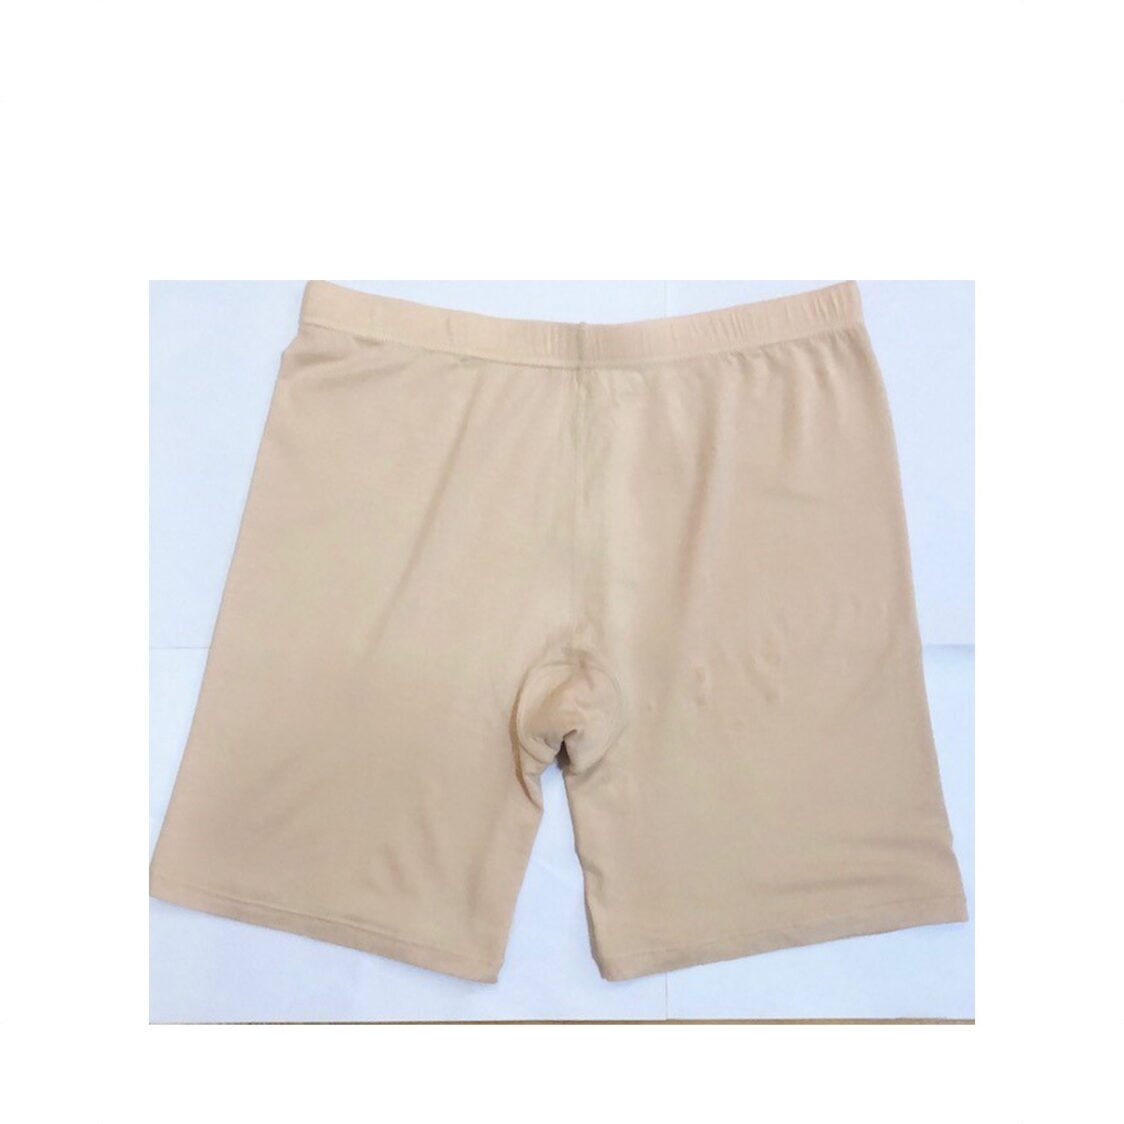 JSerene Safety Pants Nude One Size